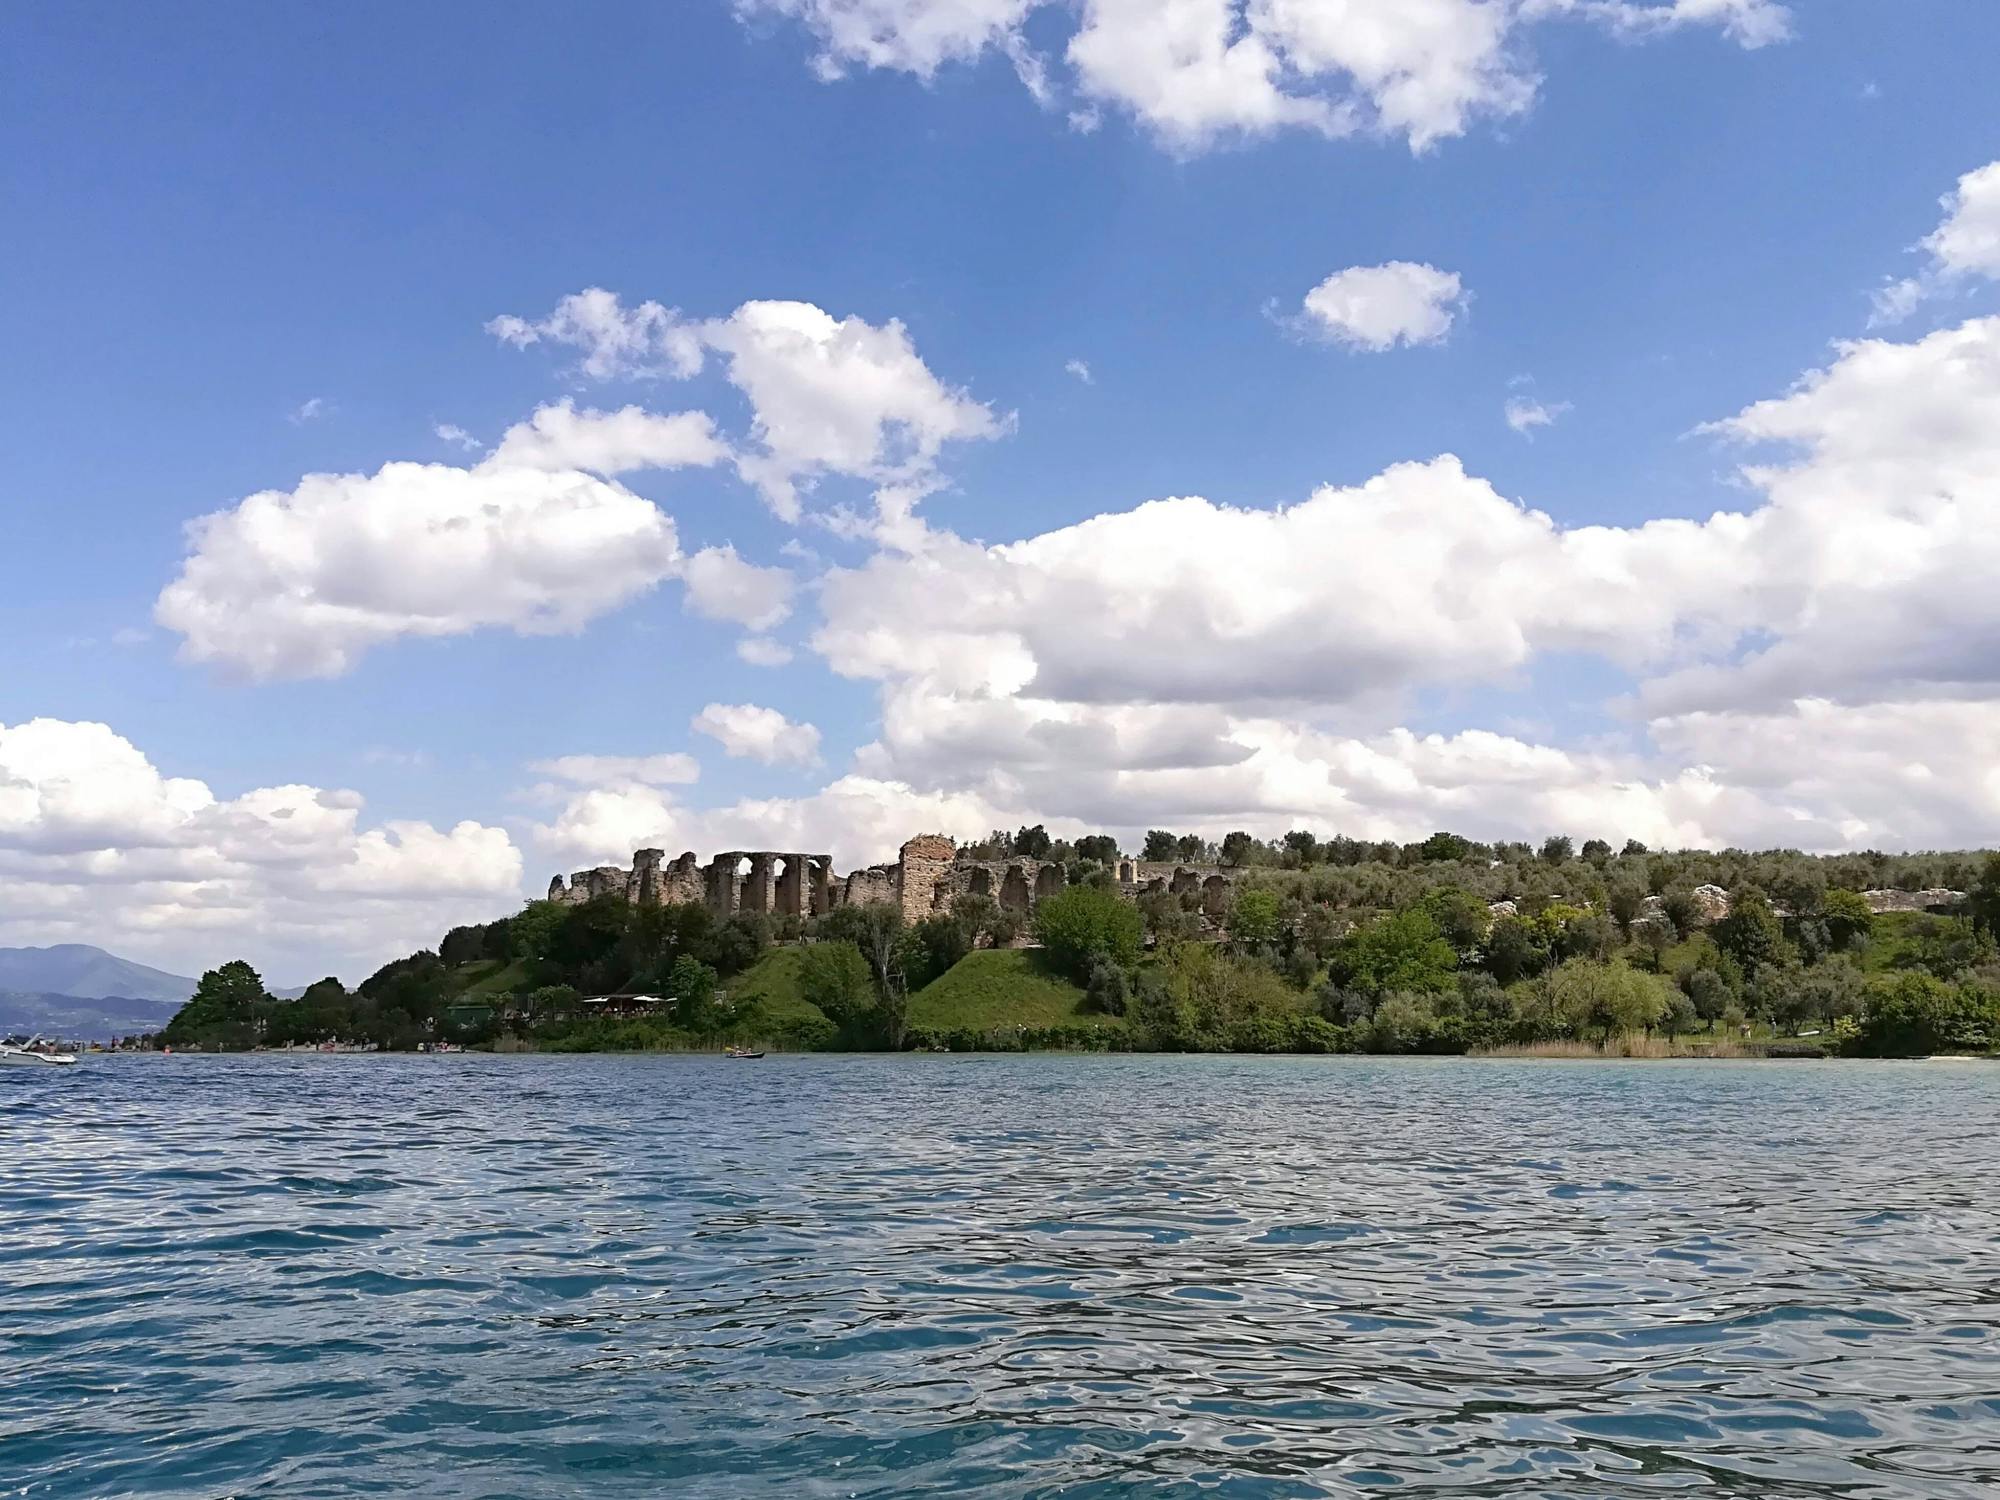 The Original Lake Garda Tour with Boat Trip - Tour of the South